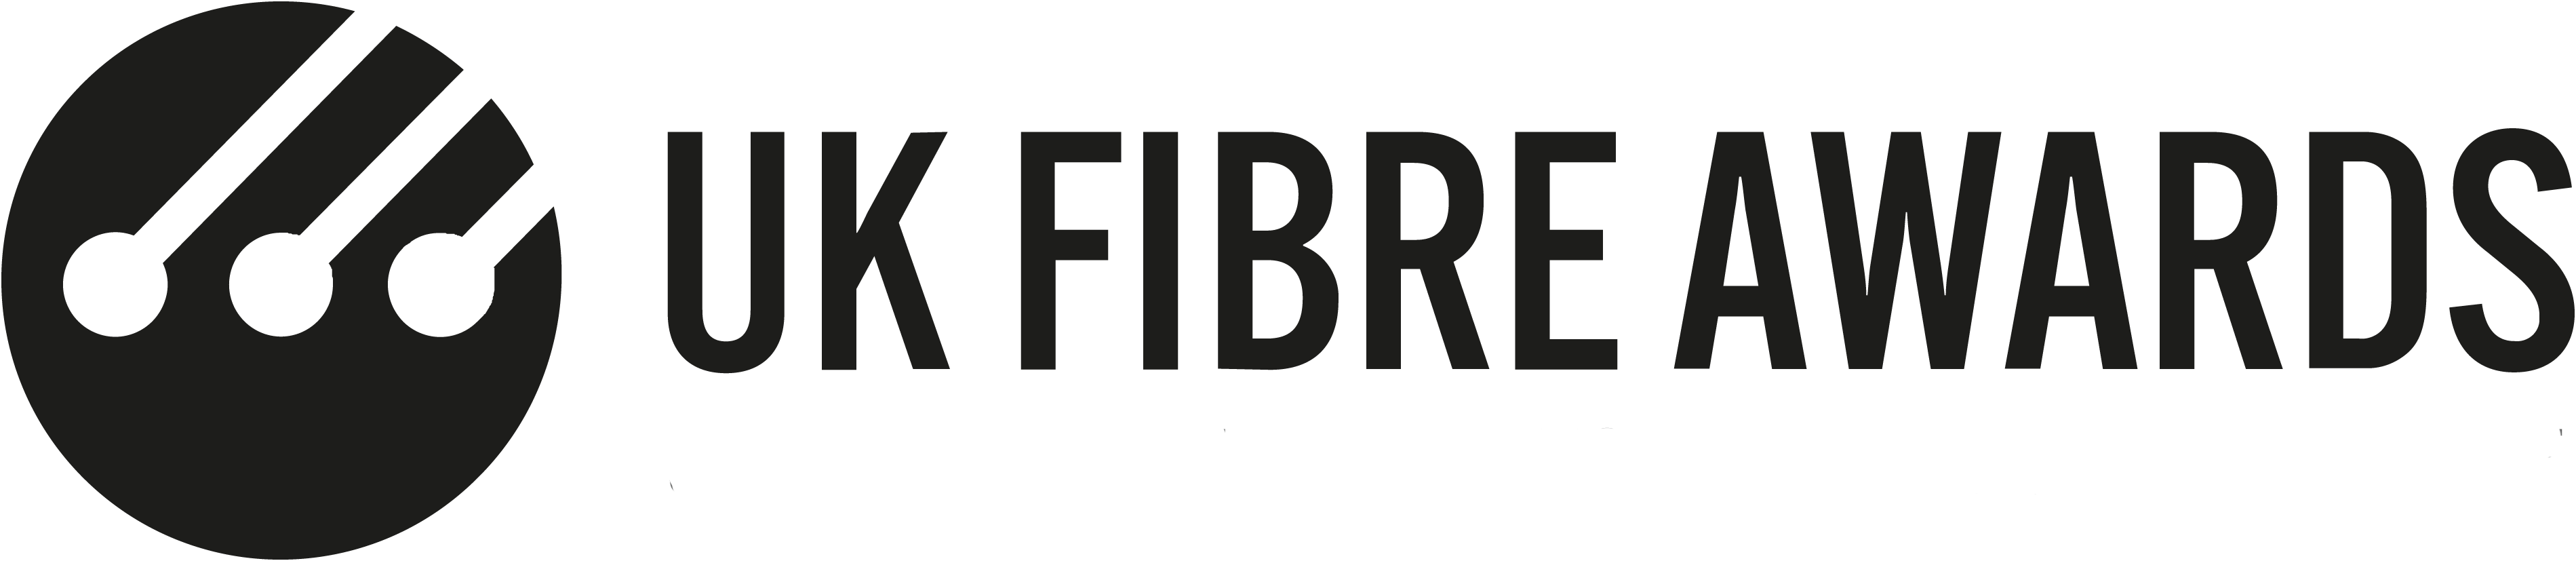 UK fibre awards logo